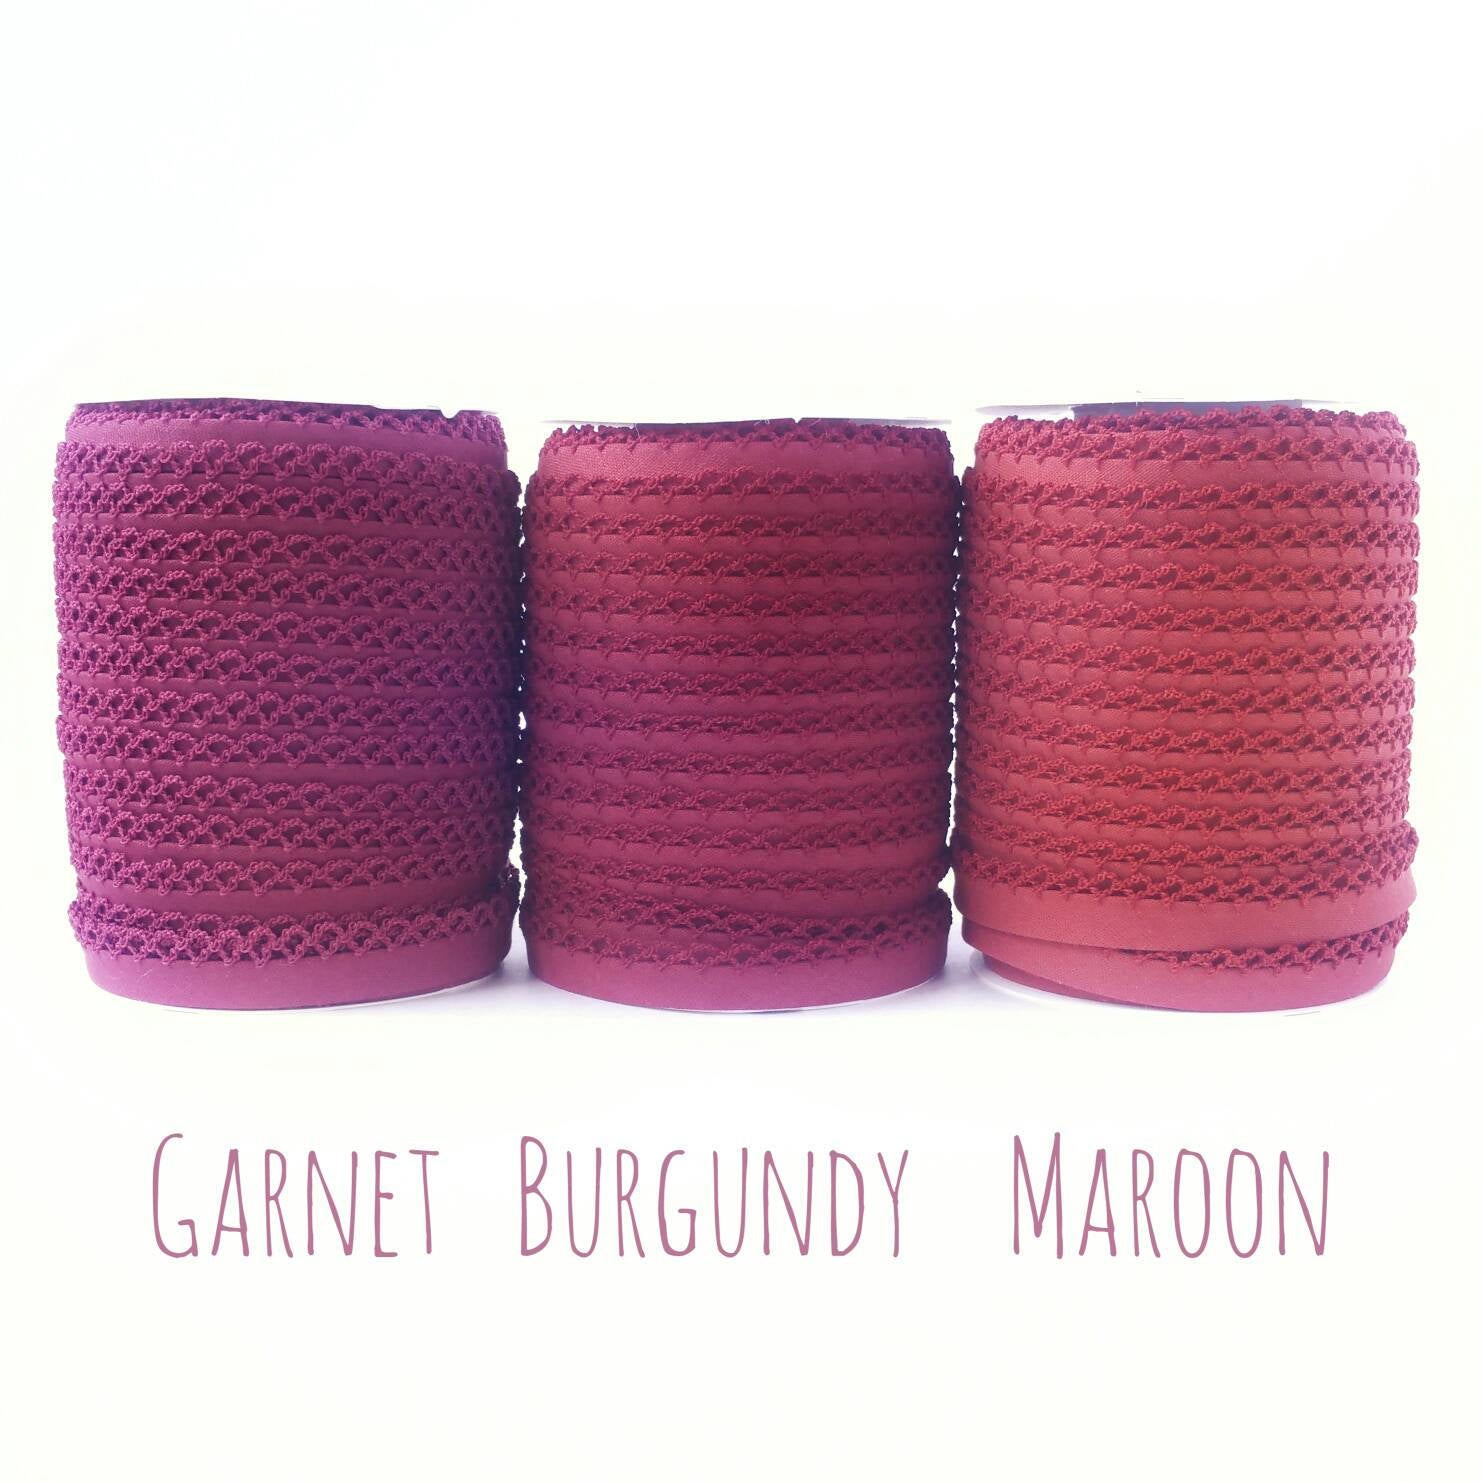 Crochet Edge Double Fold Bias Tape, Picot Edge, Quilt Binding, GARNET, BURGUNDY & MAROON Crochet Bias Tape By the Yard, Purple Red Bias Tape